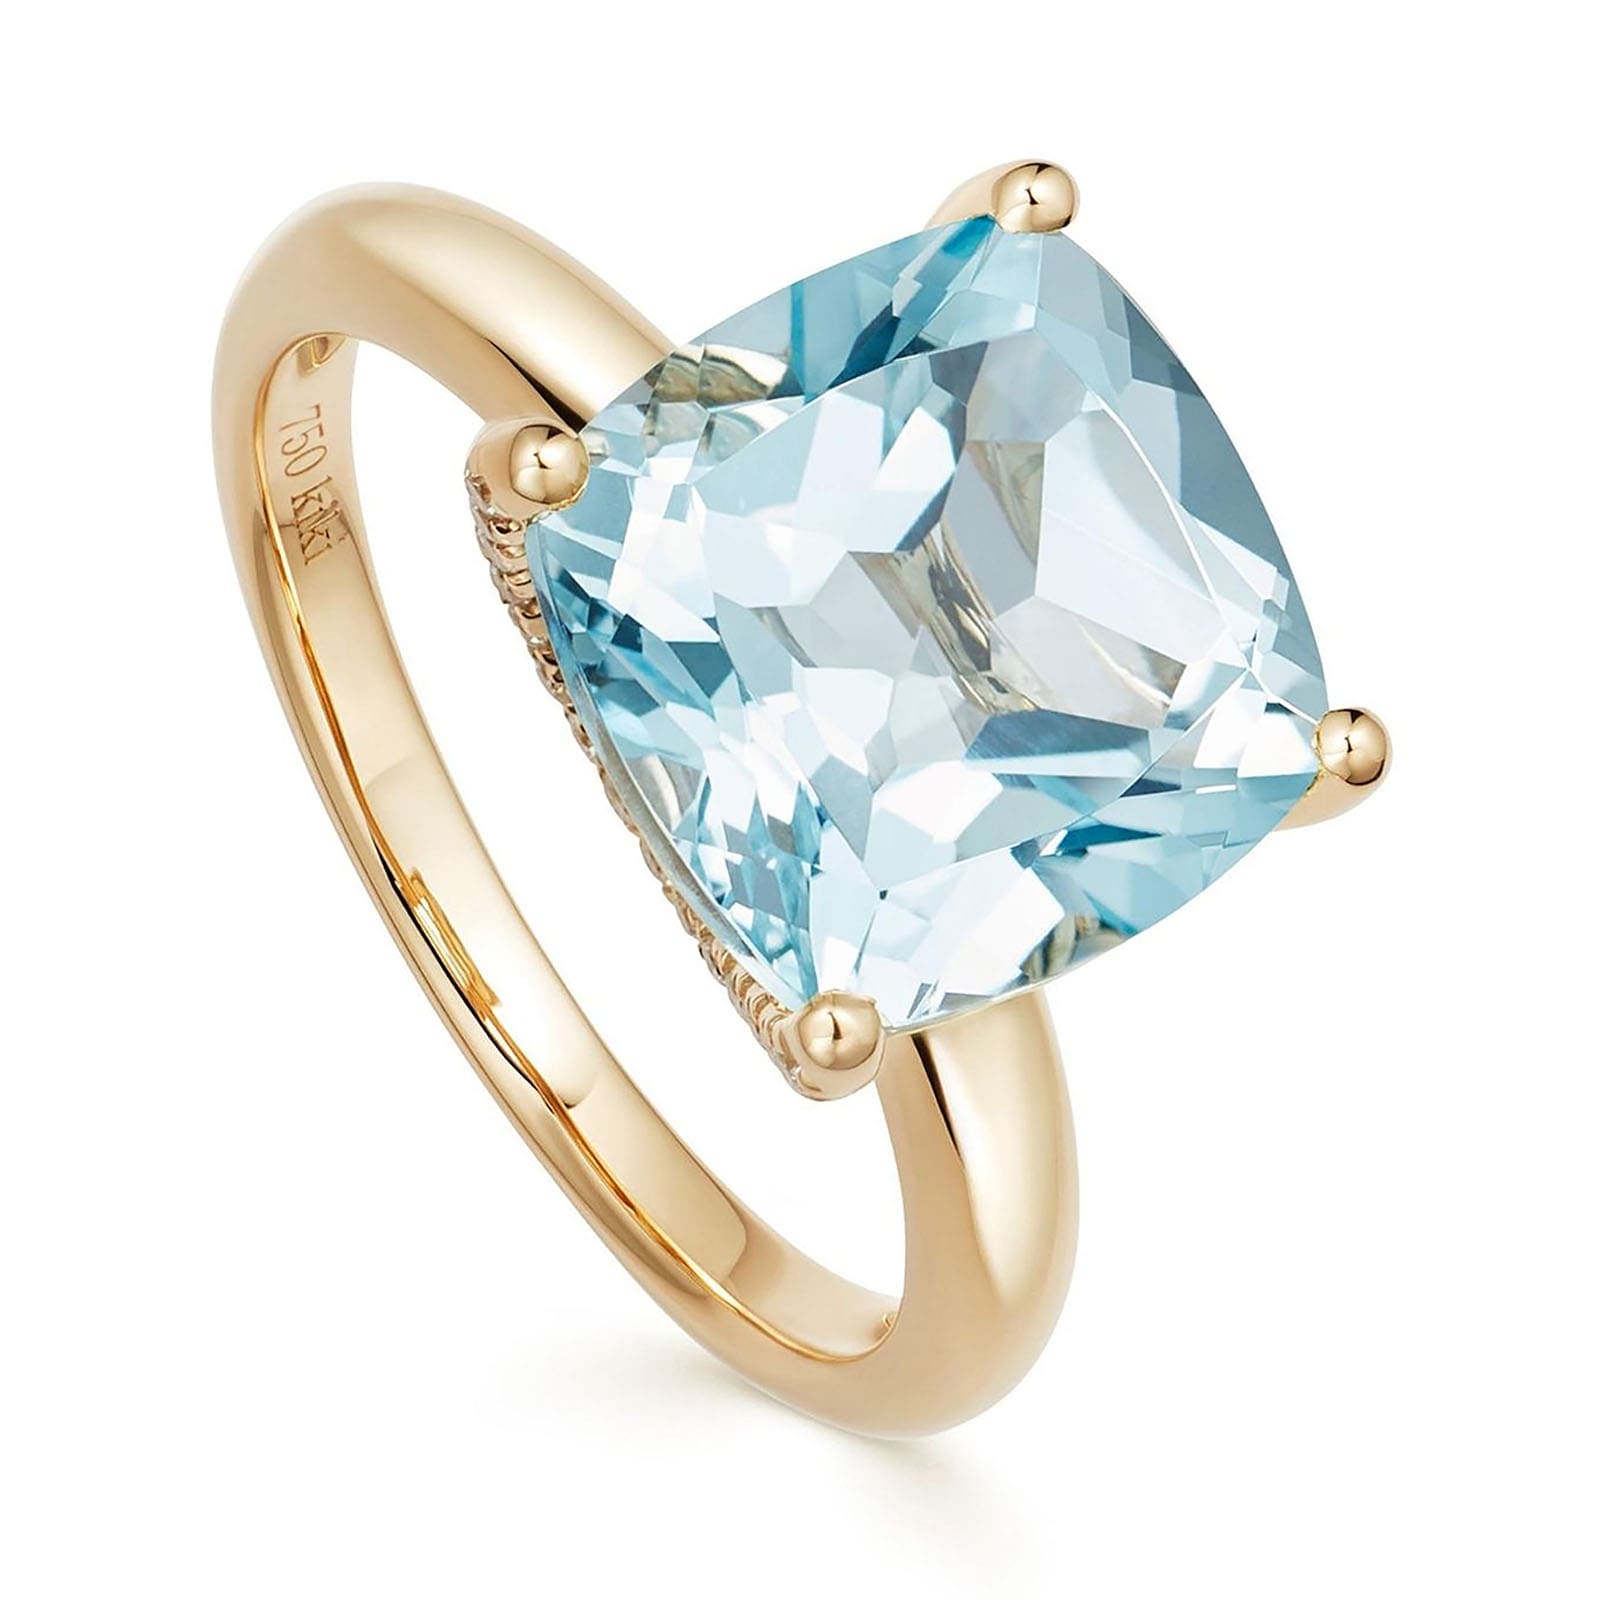 Kiki Cushion 18ct Yellow Gold, Diamond Claw & Blue Topaz Ring - Ring Size M